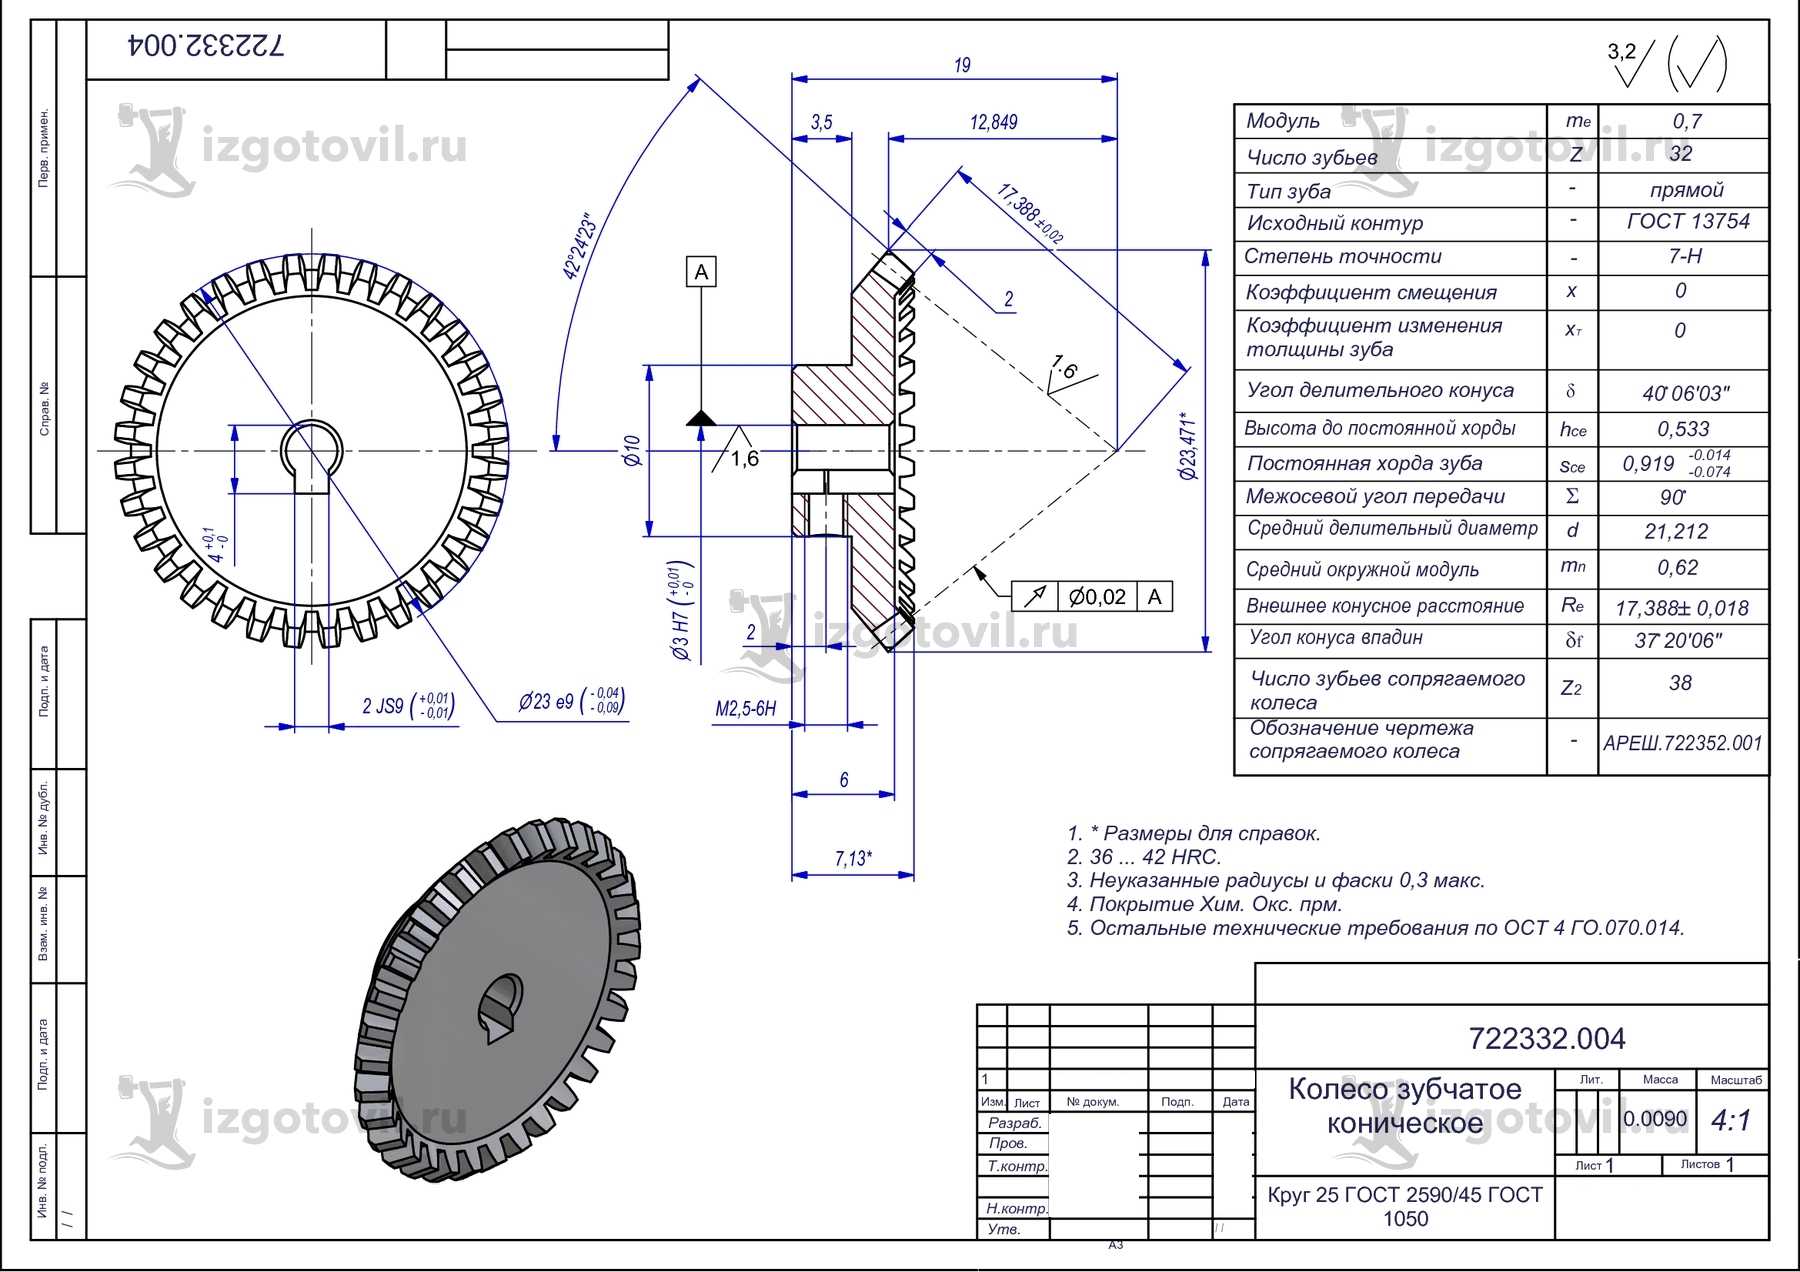 Таблица параметров зубчатого колеса на чертеже - 83 фото